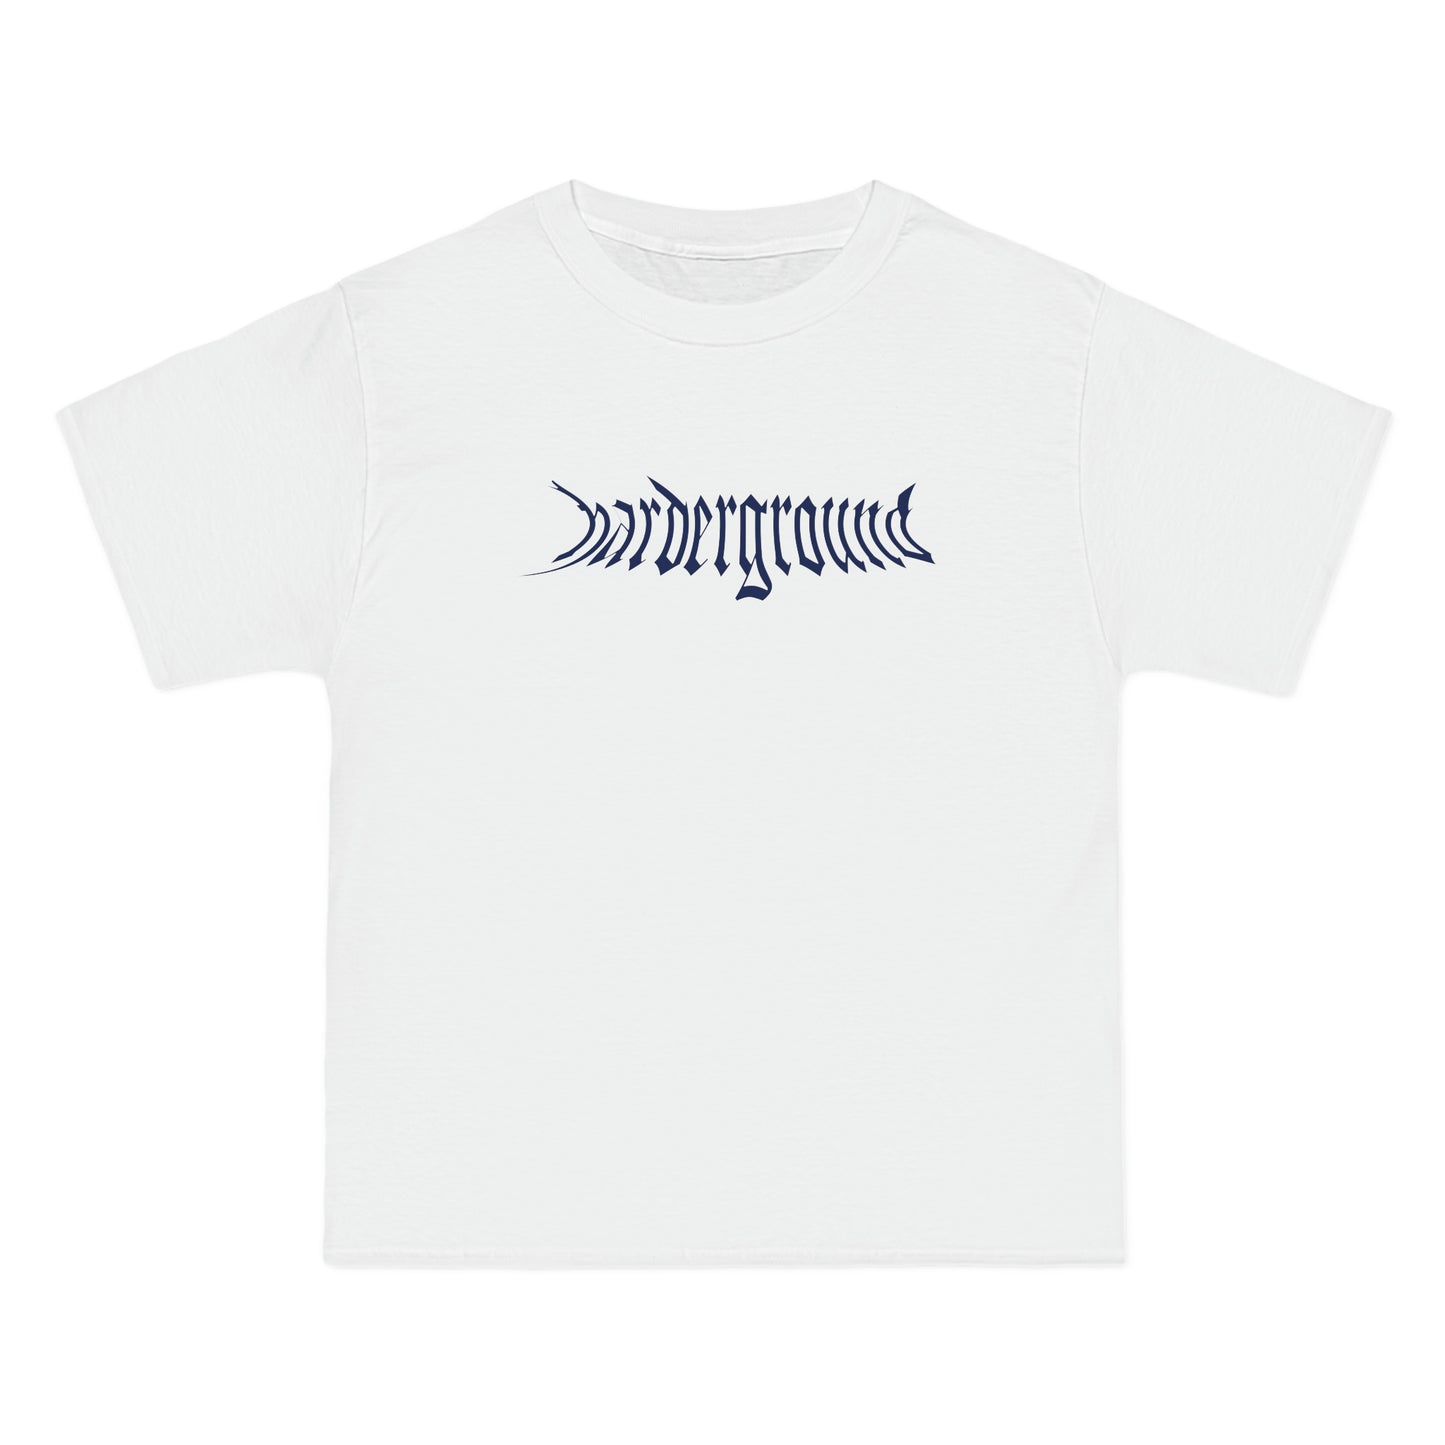 FLOWER Harderground - Front & back logos - Beefy-T®  Short-Sleeve T-Shirt